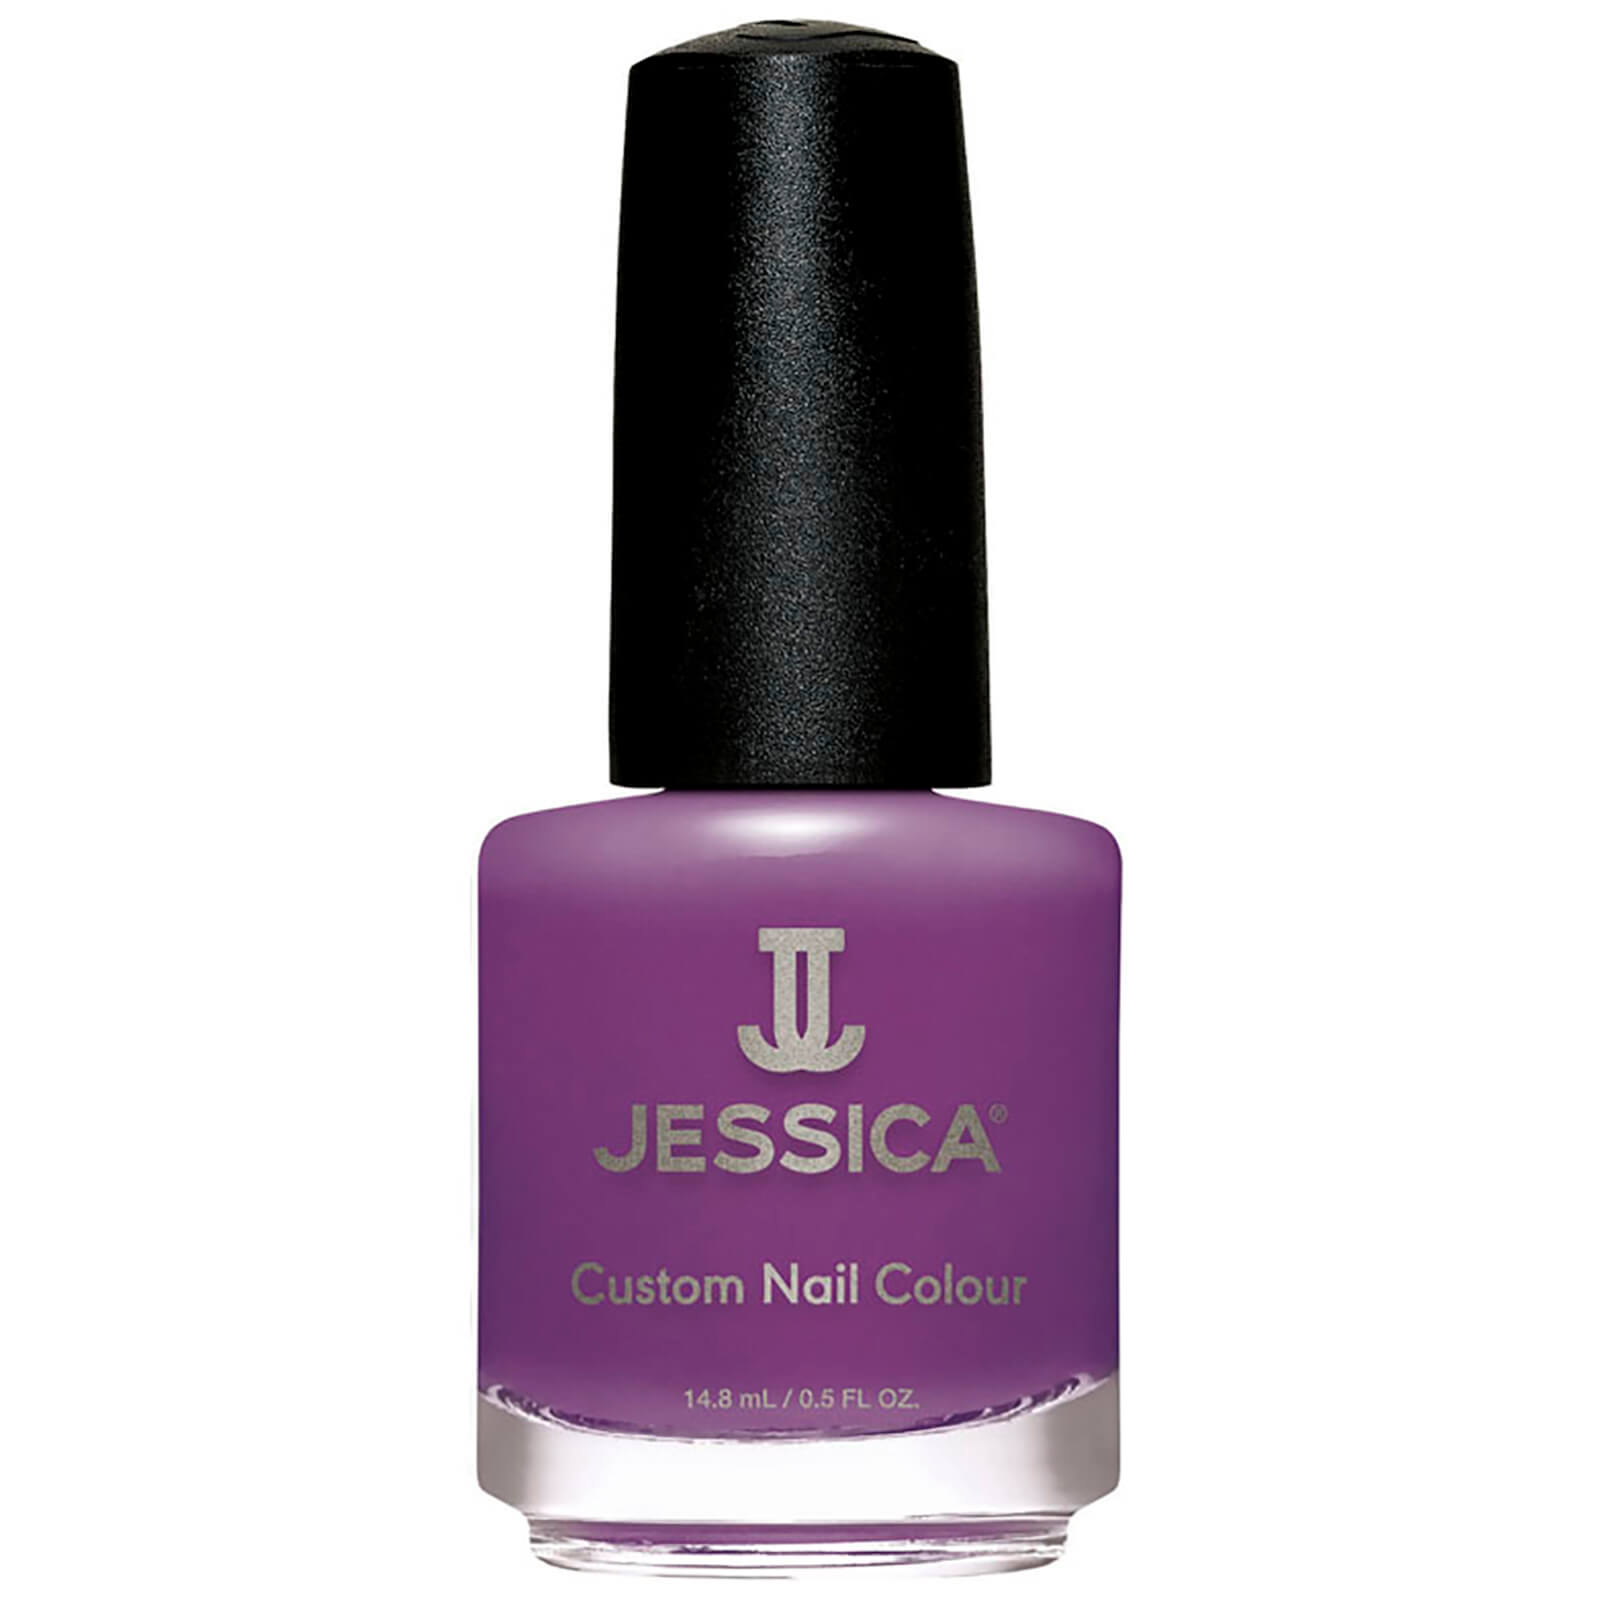 Esmalte de uñas Custom Nail Colour de Jessica - Morado 14,8 ml